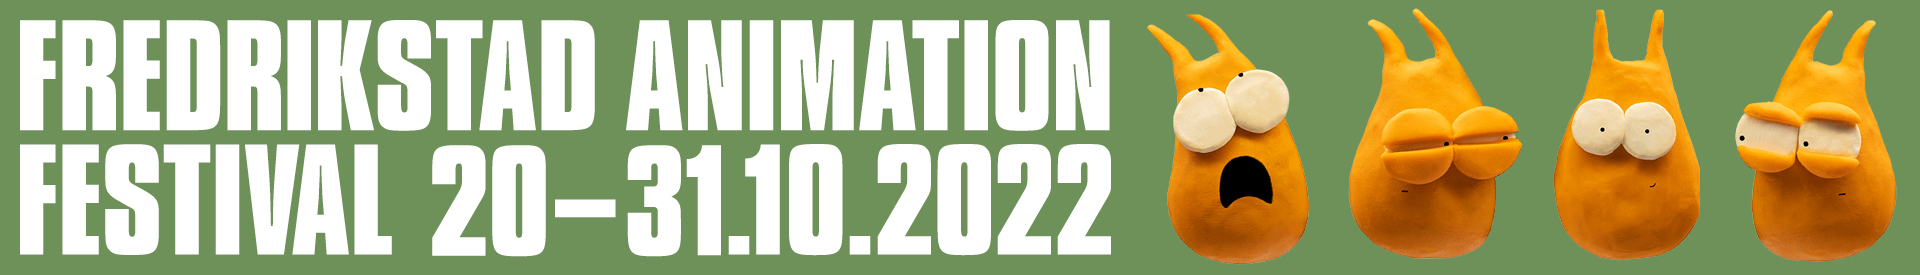 Fredrikstad Animation Festival 2022